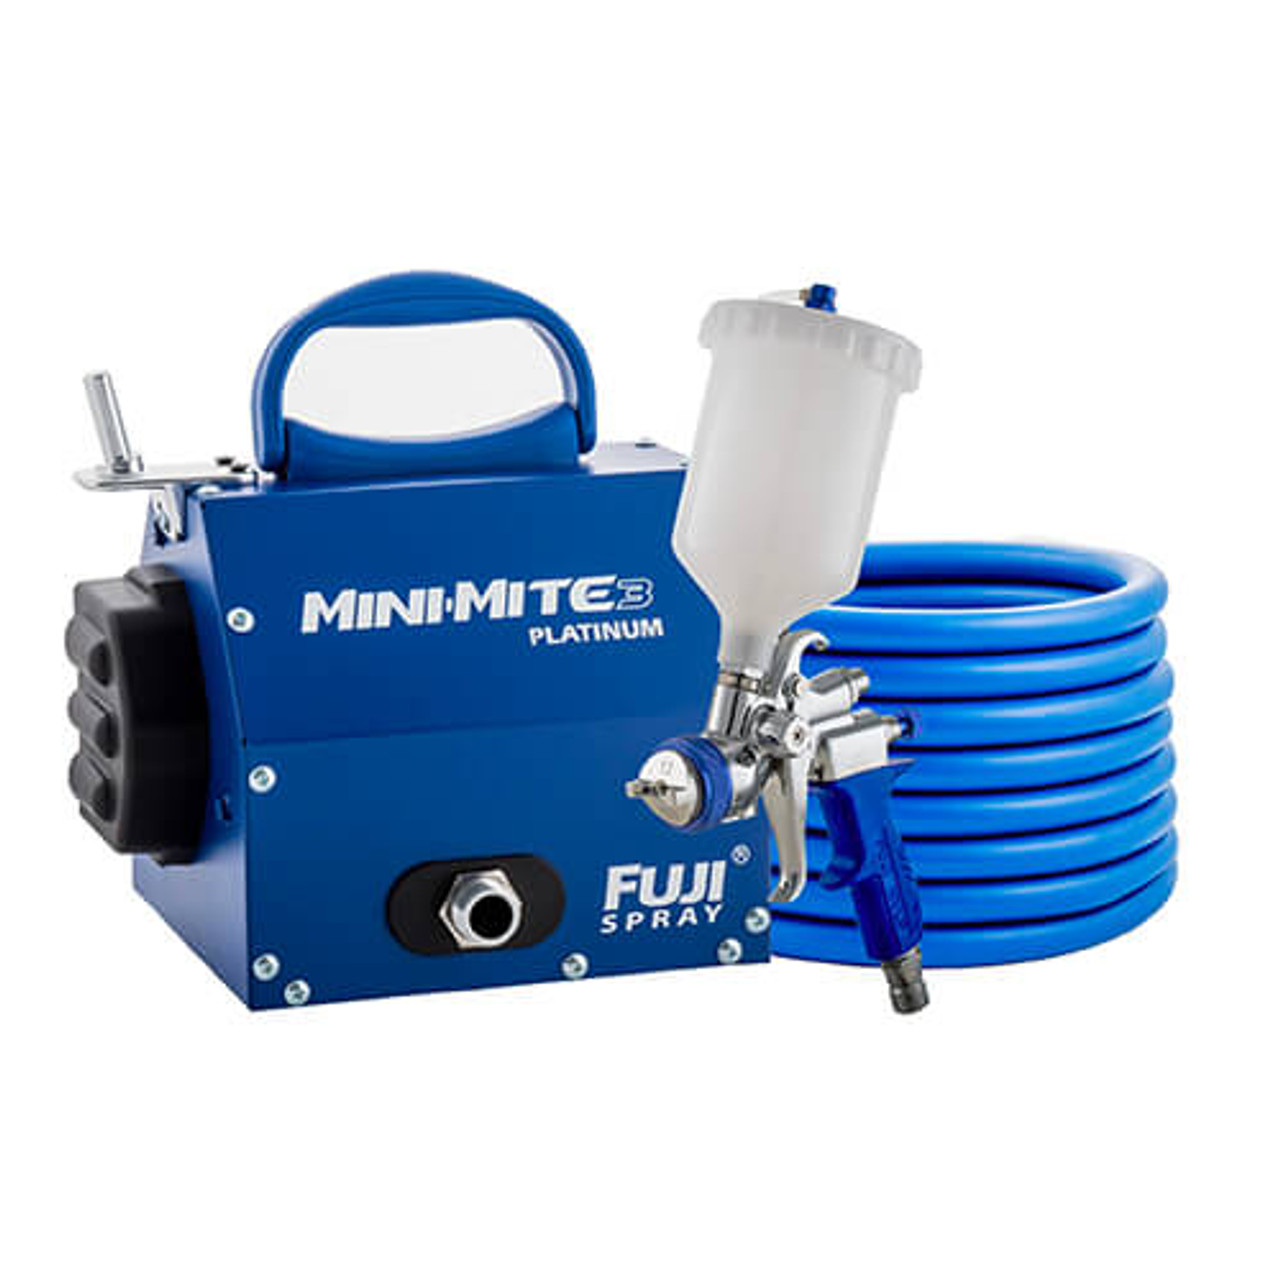 FUJI Spray Mini-Mite 3 Platinum Edition, T75G Gravity Feed System